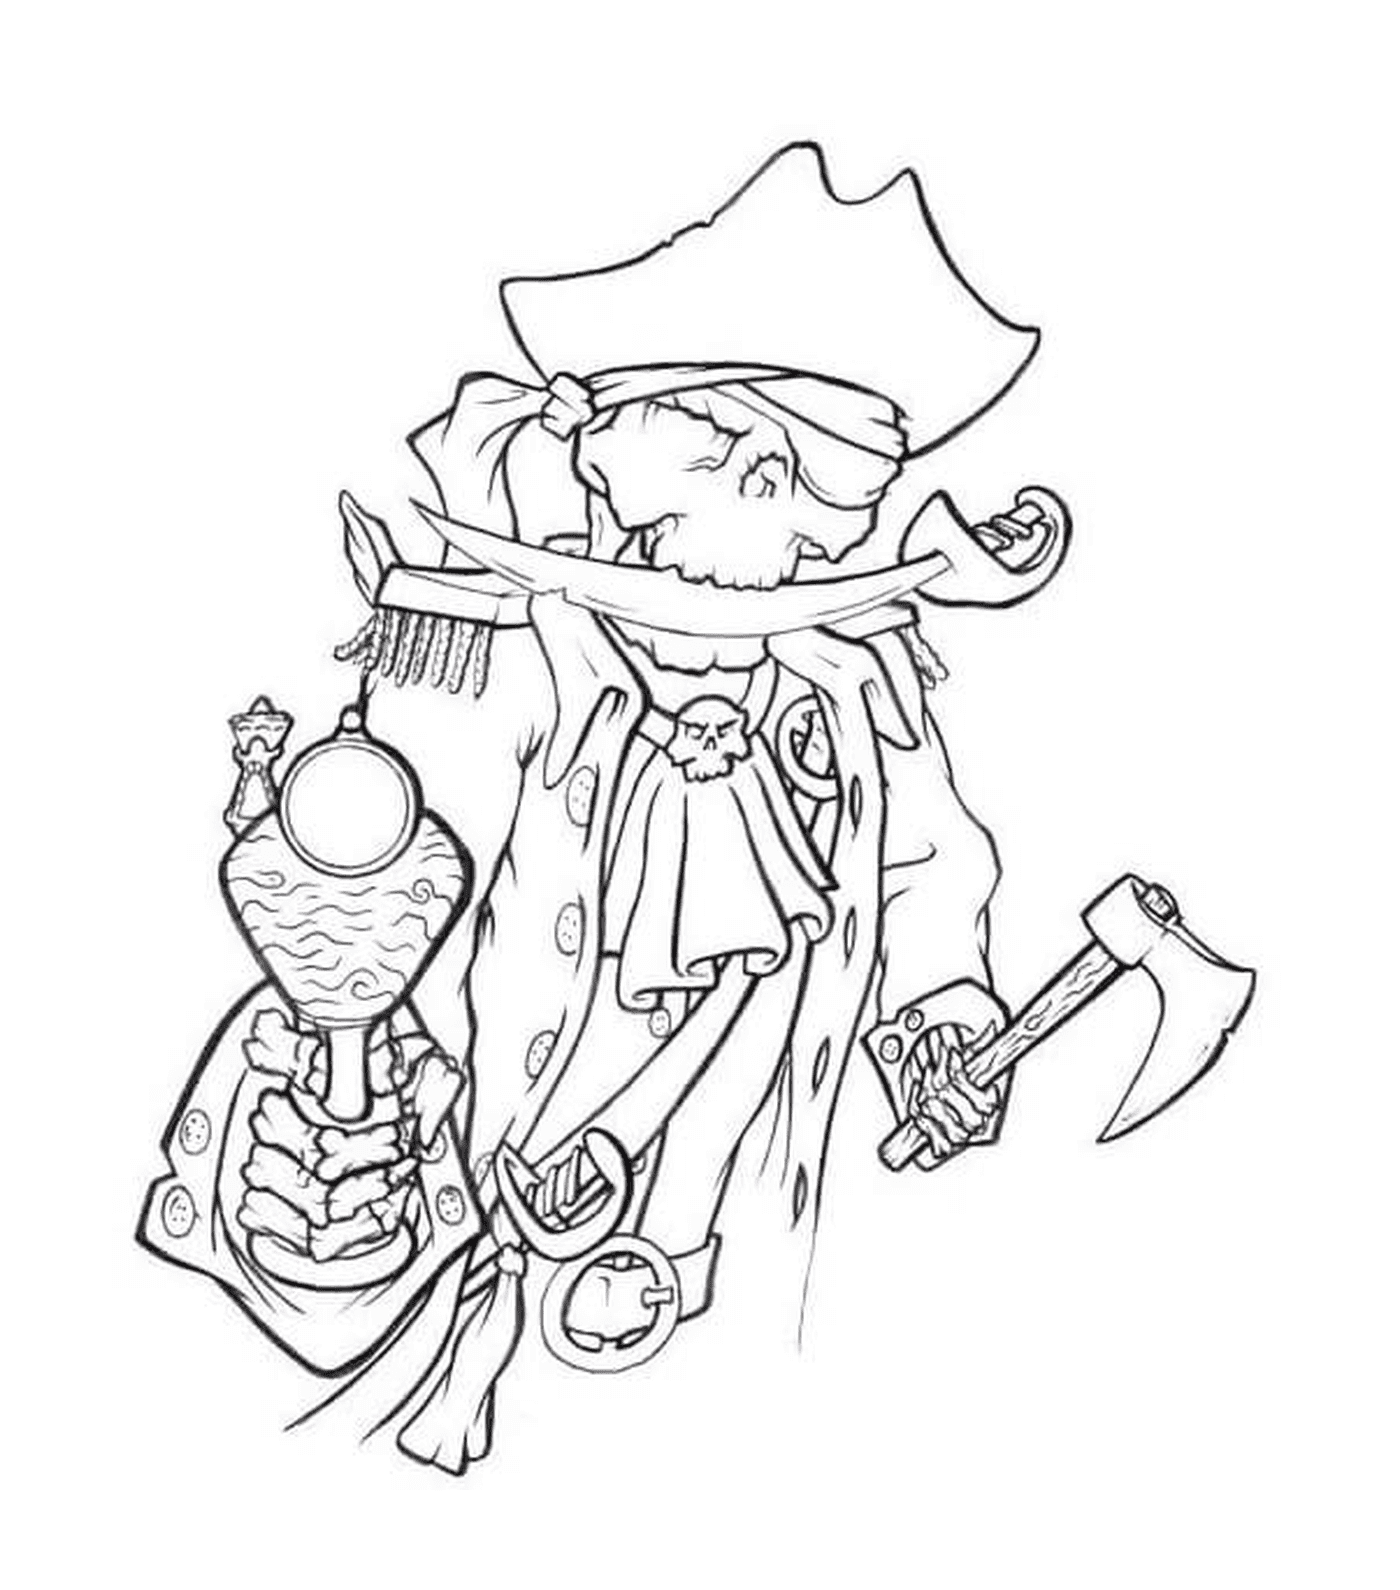  Pirate Skeleton 